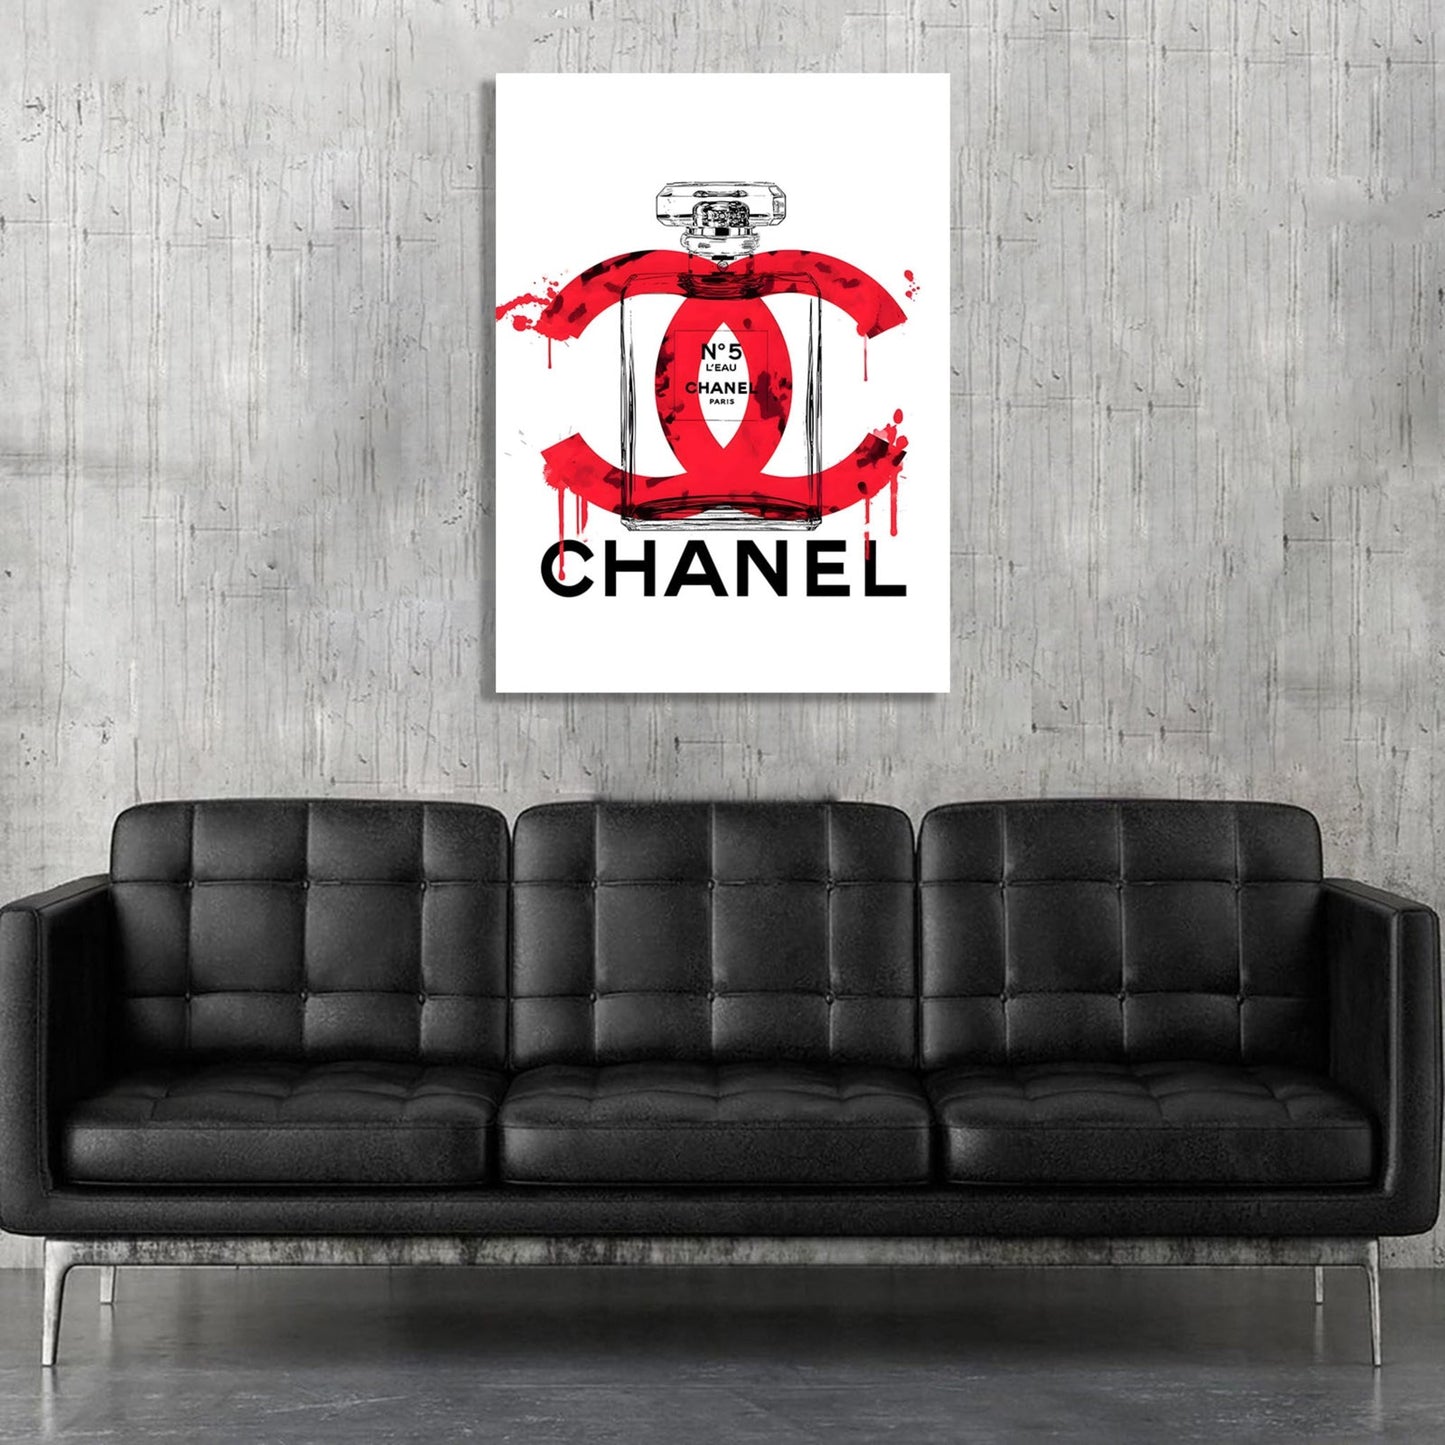 Red Chanel Perfume Wall Art